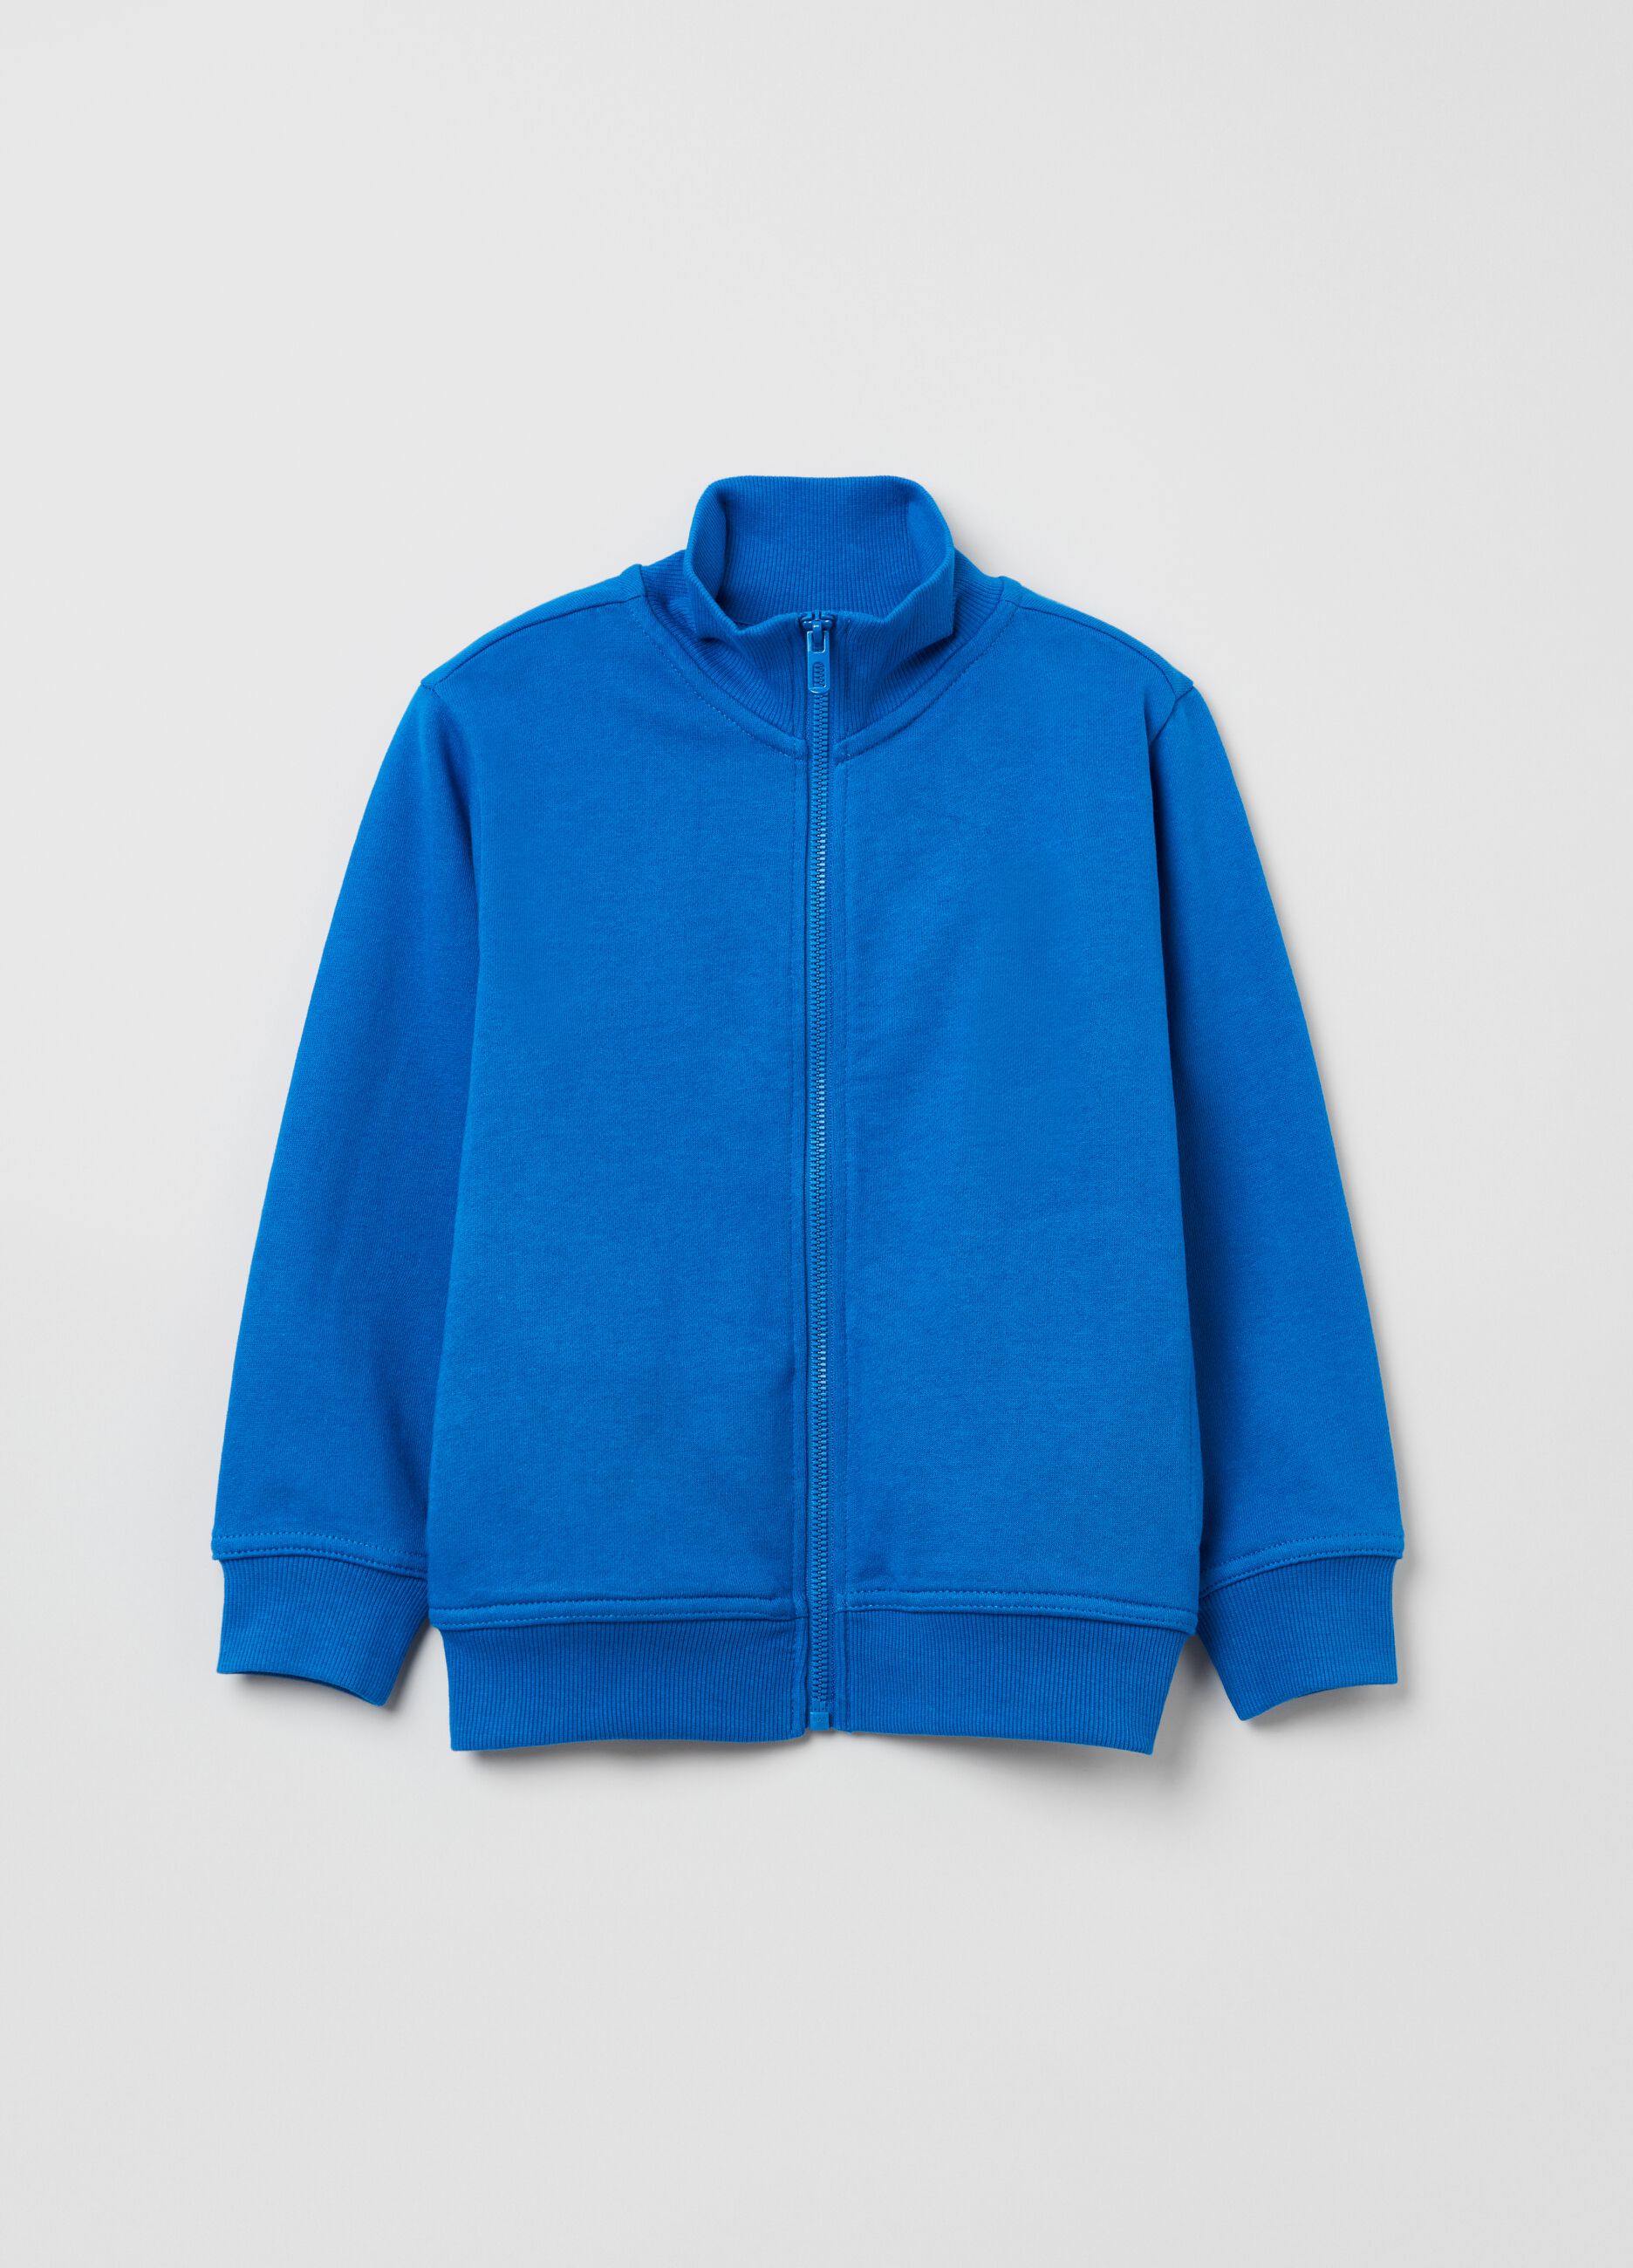 Fleece full-zip sweatshirt with high neck